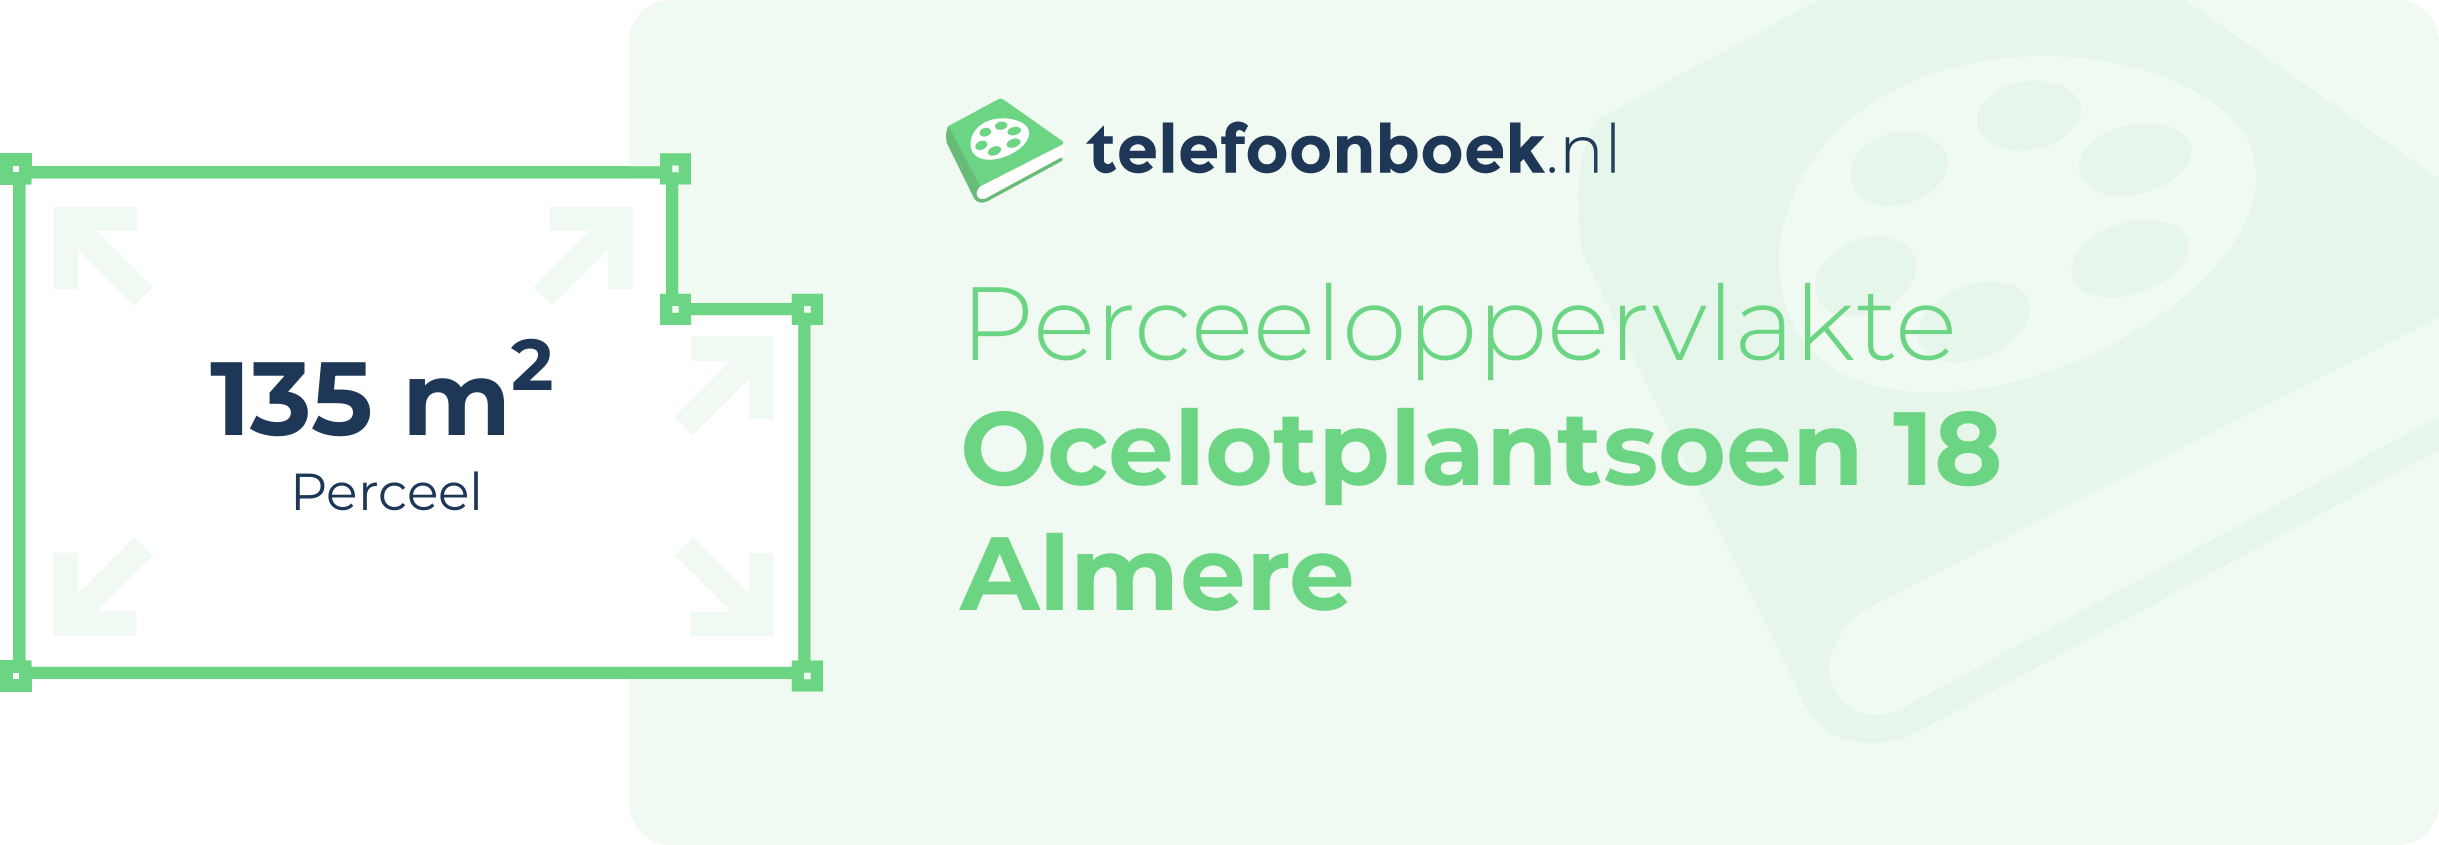 Perceeloppervlakte Ocelotplantsoen 18 Almere